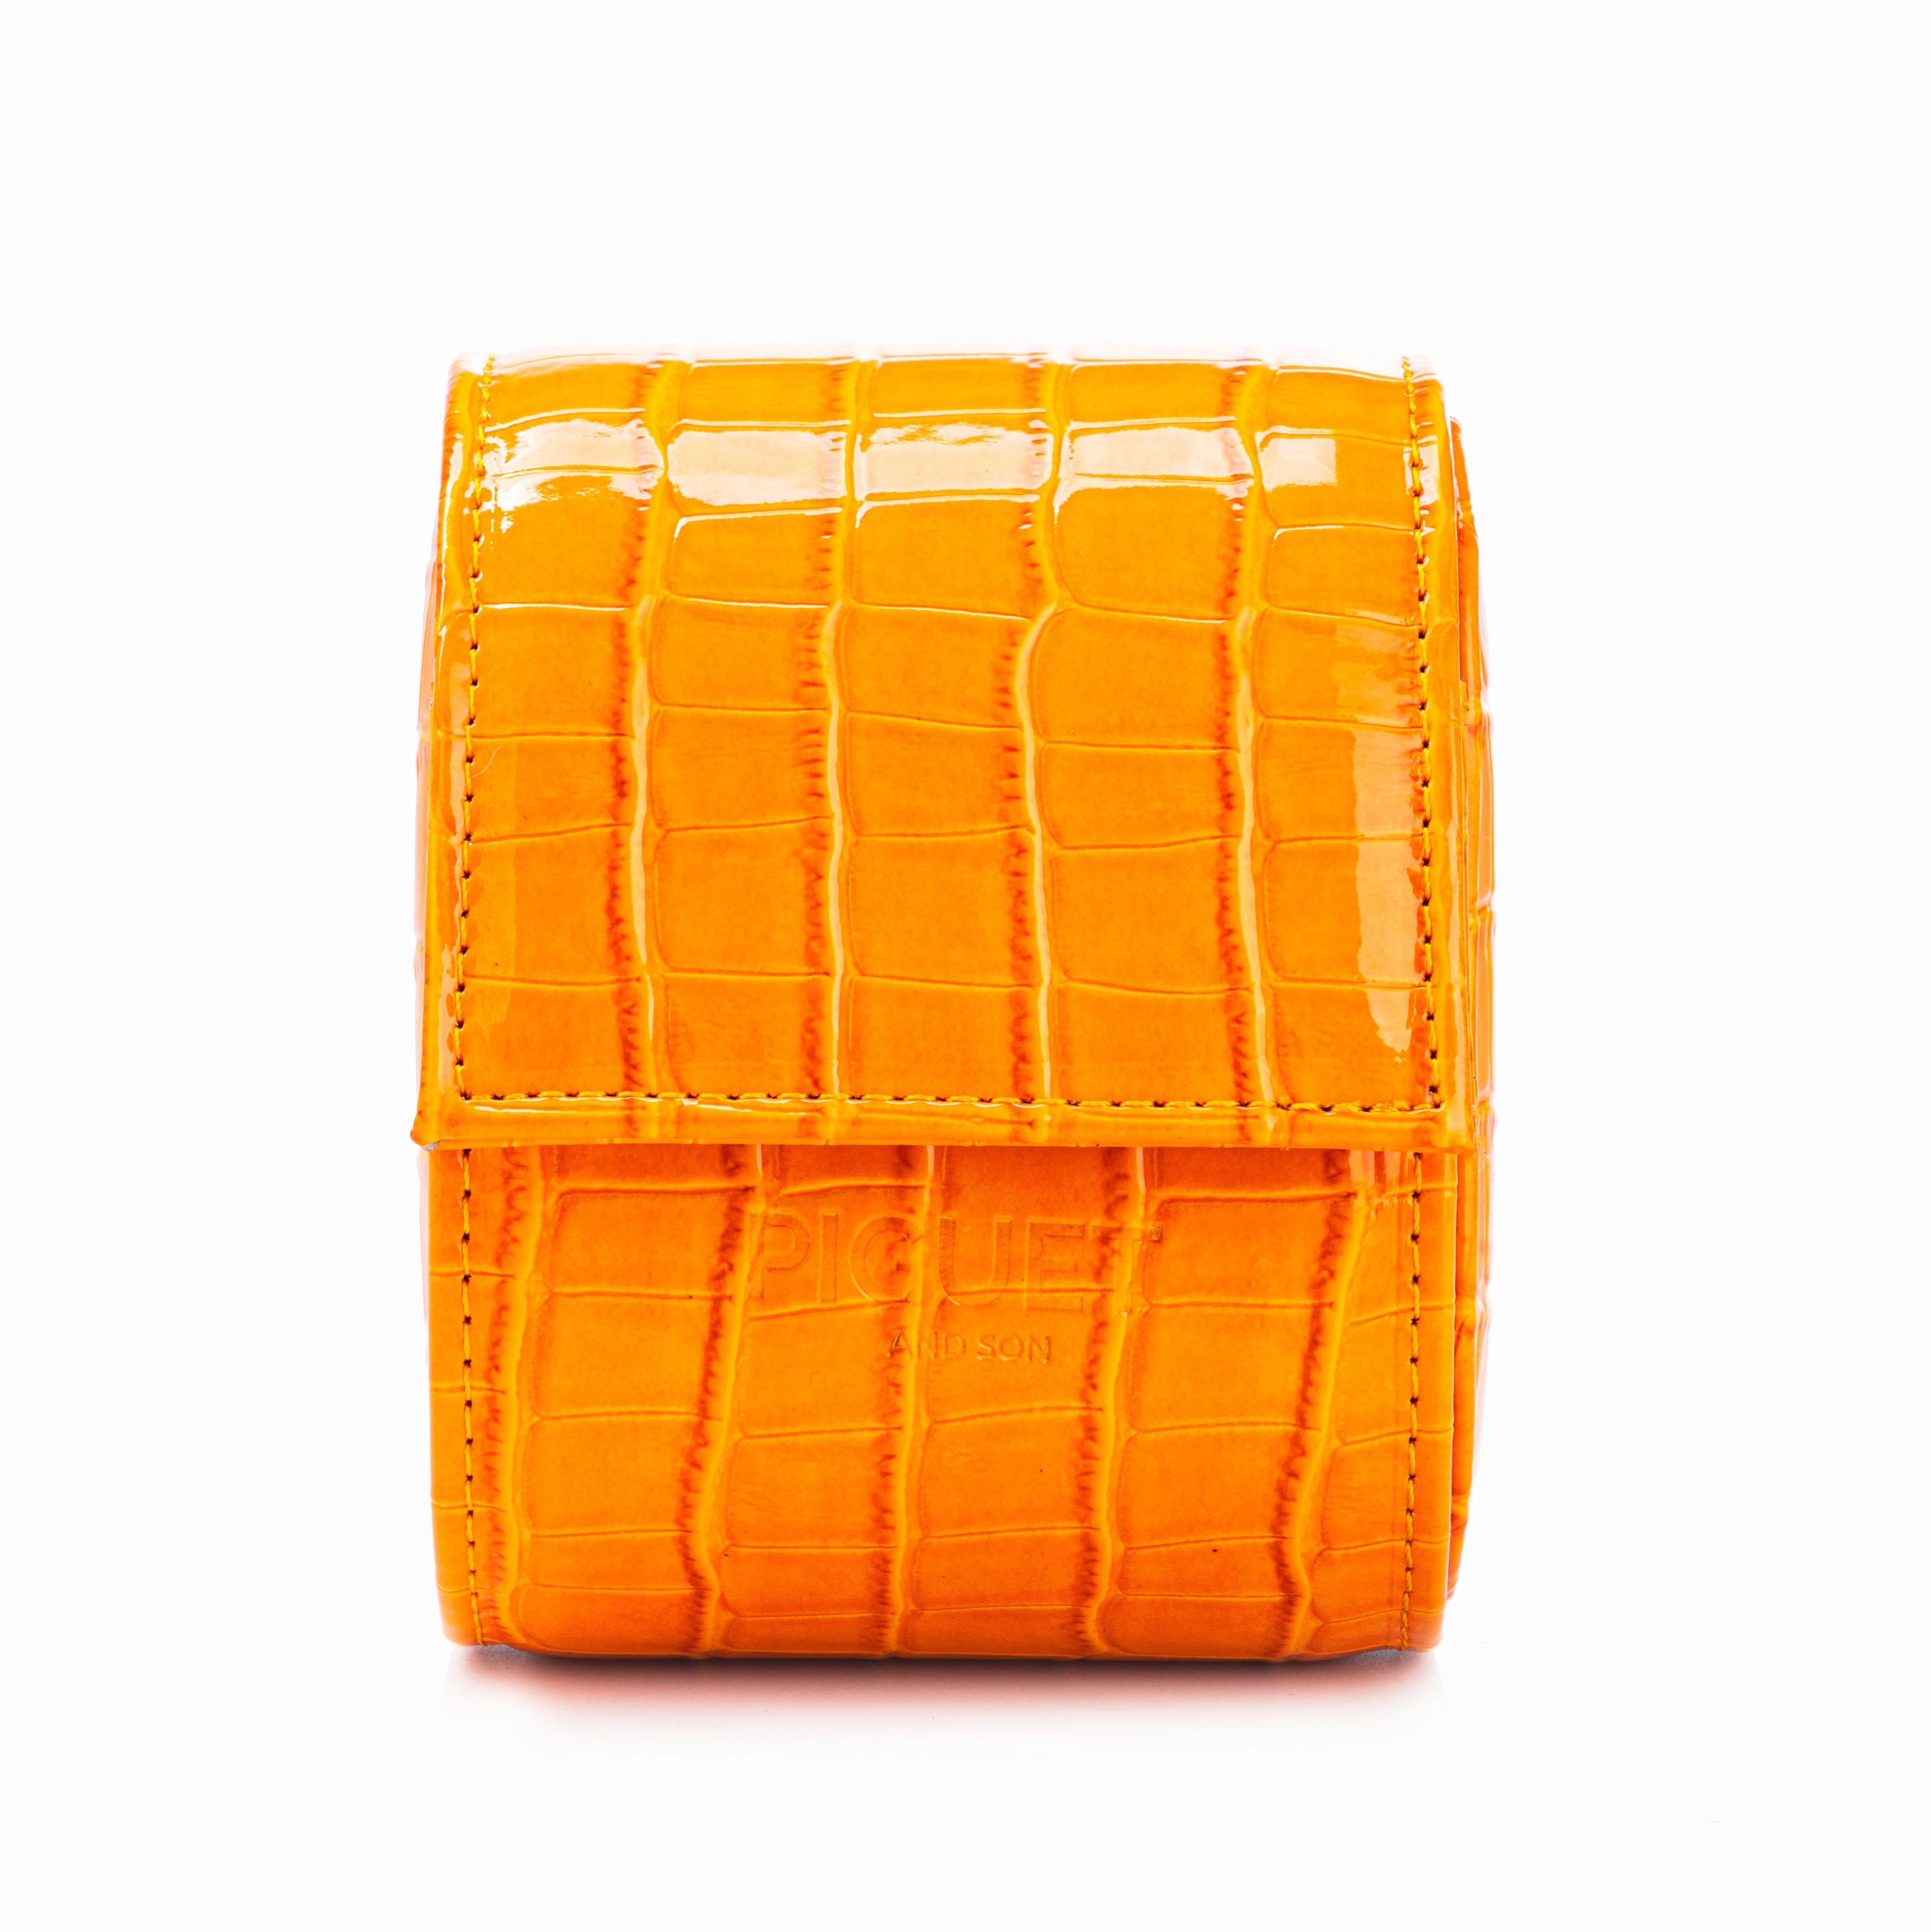 Orange Croco Watch Roll - One Watch